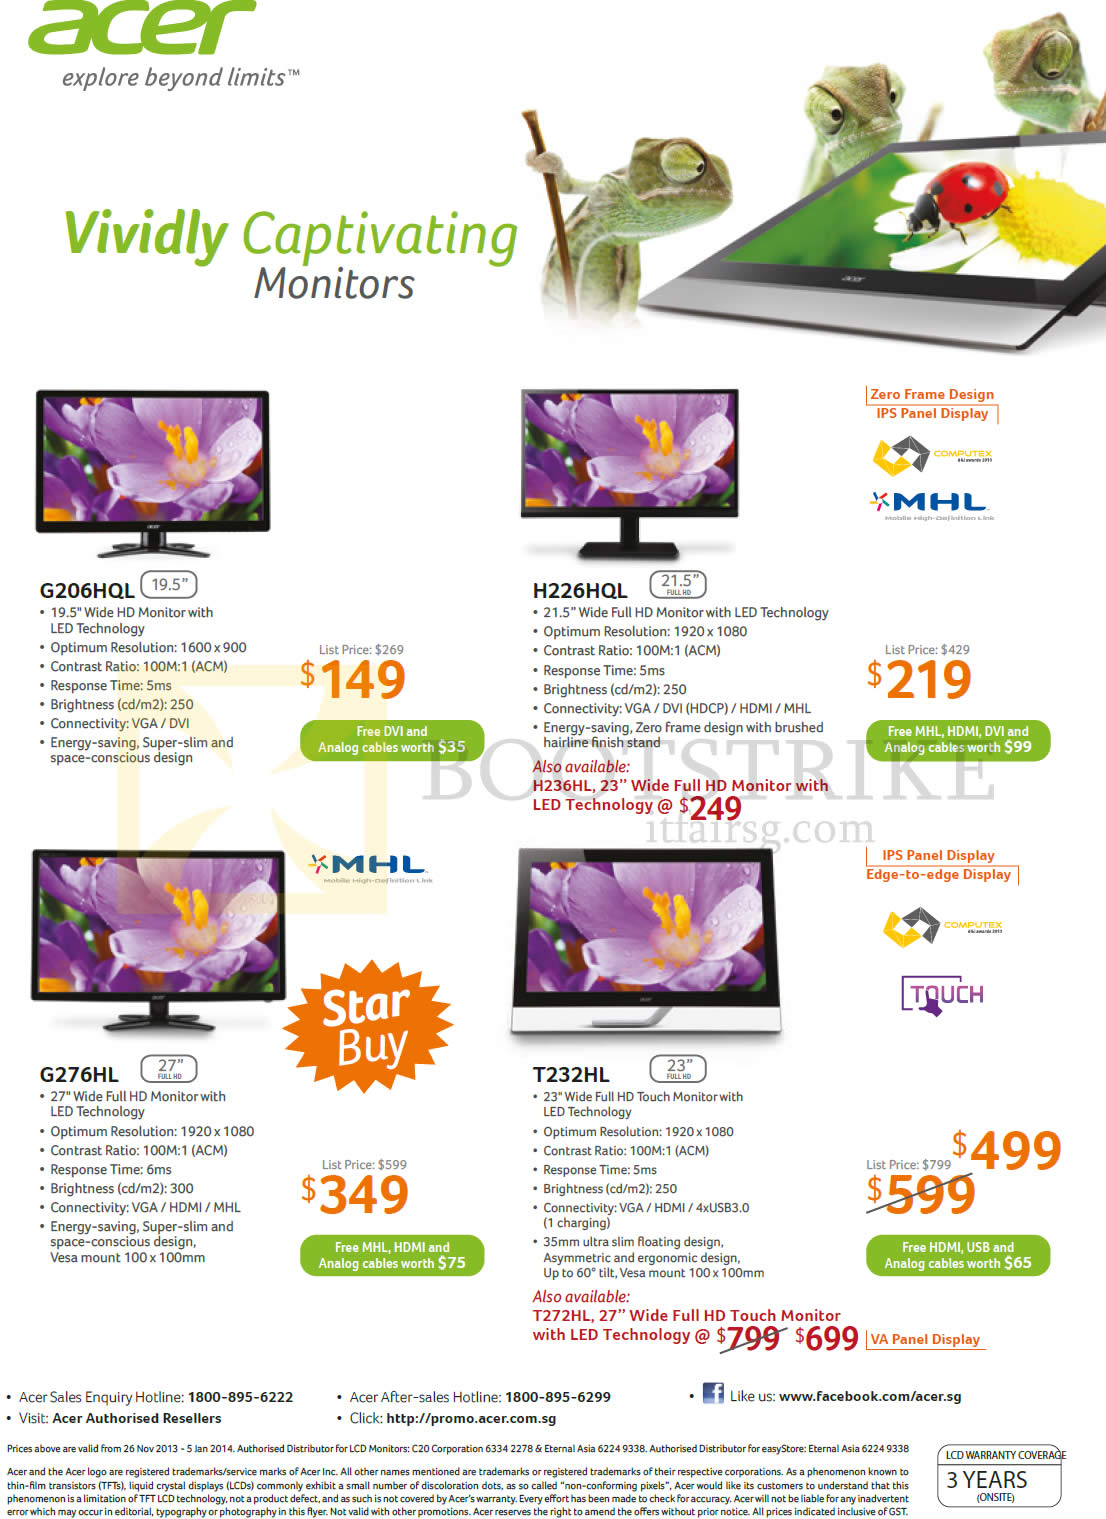 SITEX 2013 price list image brochure of Acer Monitors G206HQL, H226HQL, G276HL, T232HL